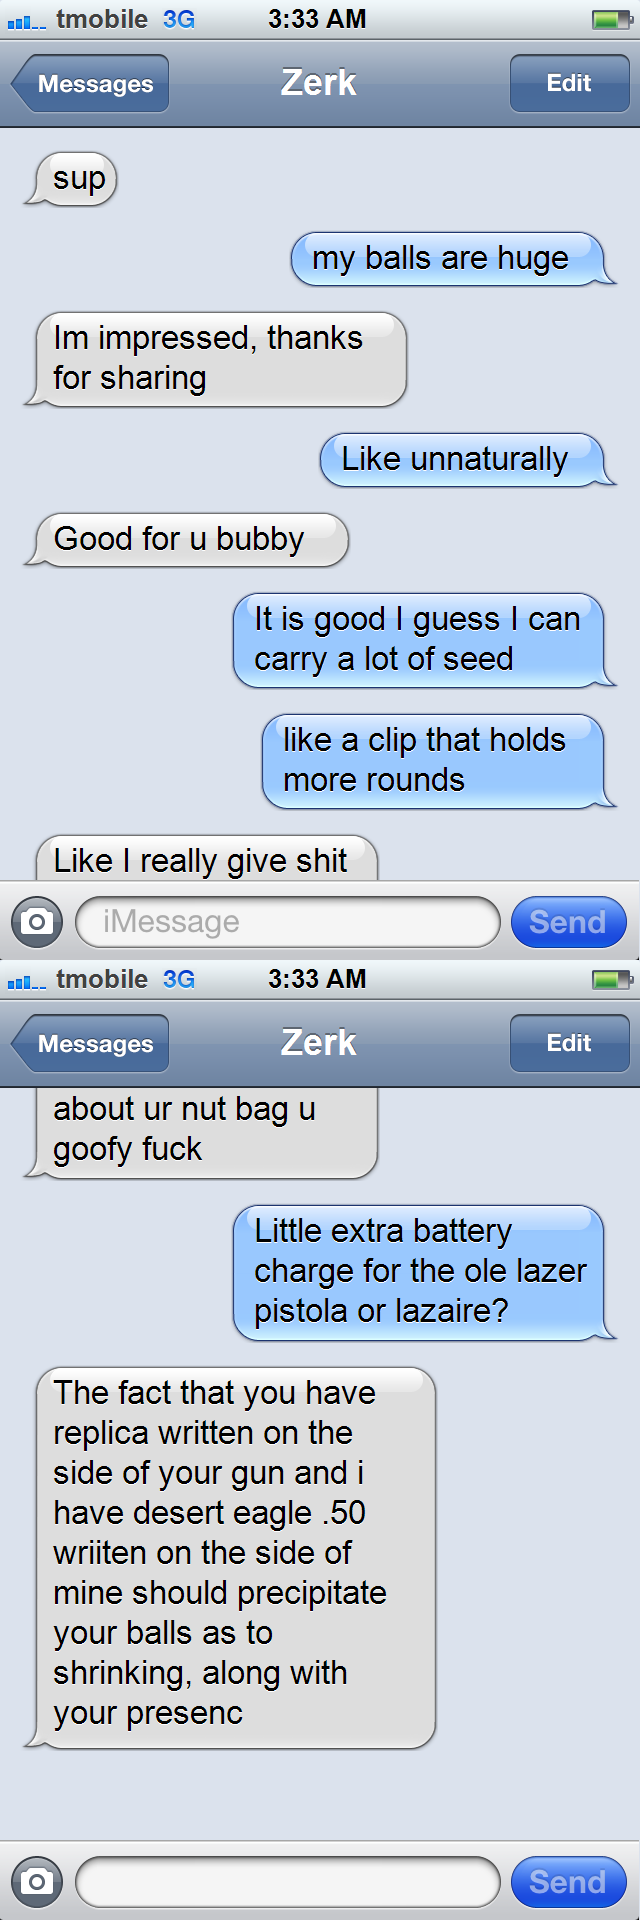 zerk don't like m Balls I guess?